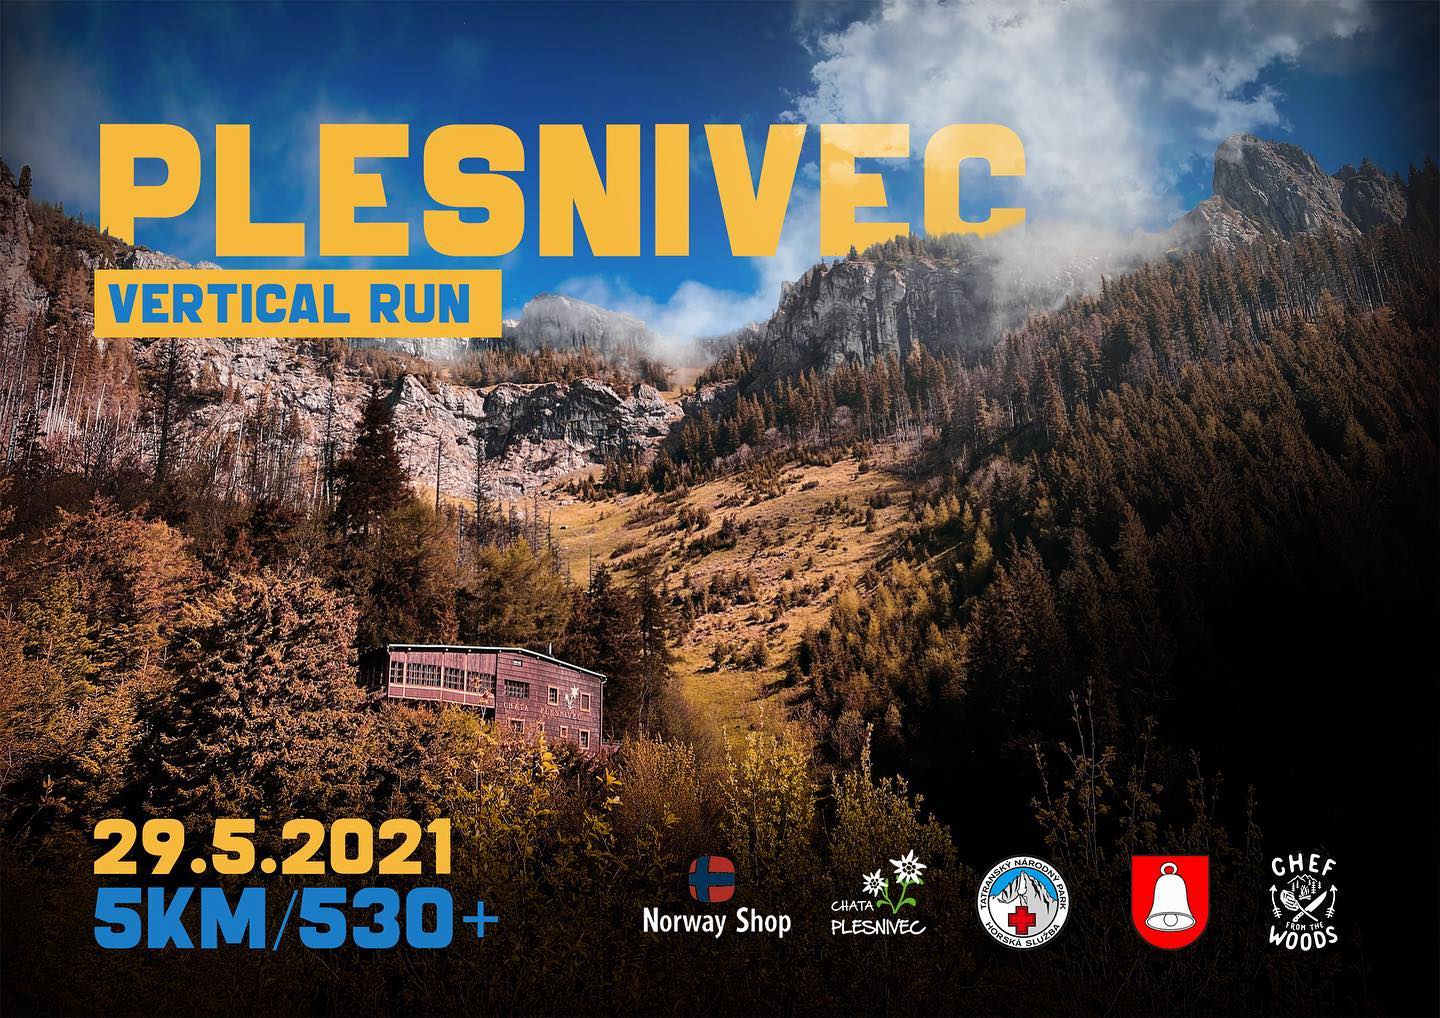 NOV - - - Plesnivec Vertical run 2021 Vysok Tatry 